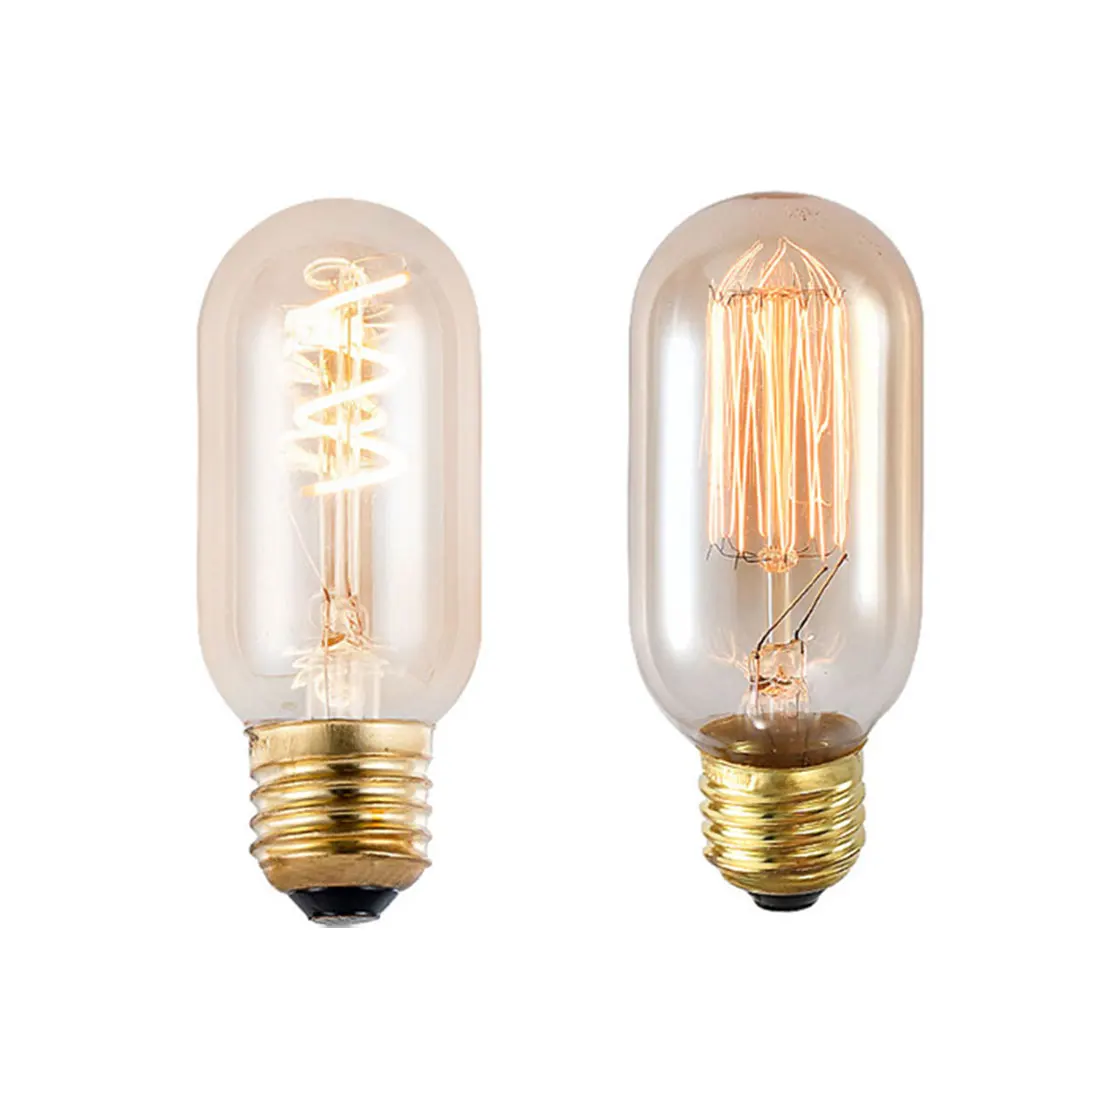 Vintage Industrial Retro Edison LED Bulb Light Lamp E27 220V  home decor 40W 